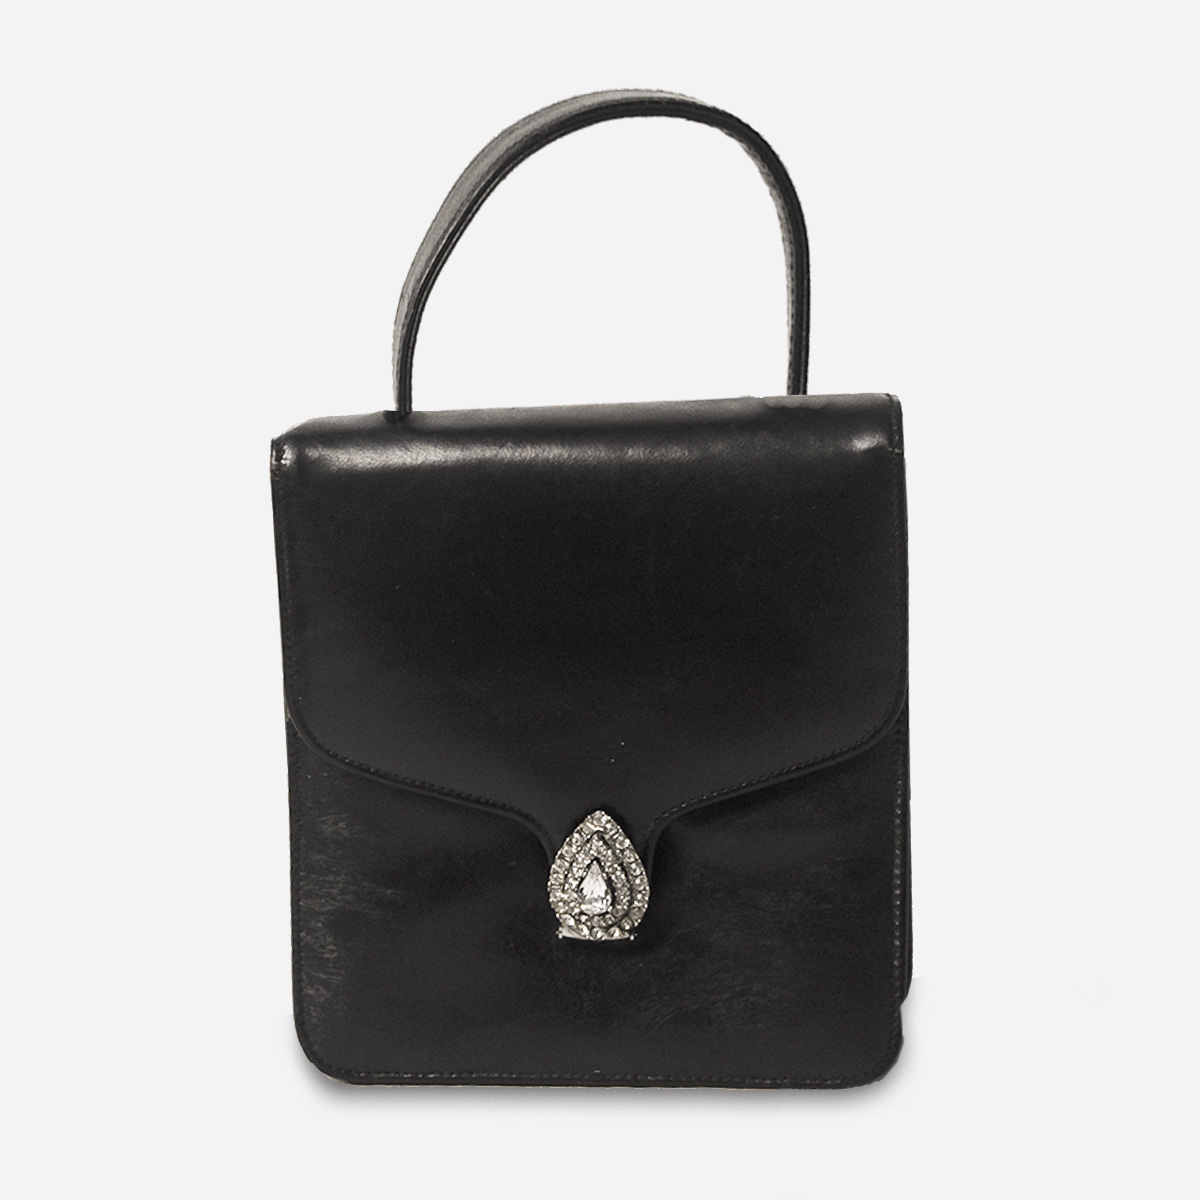 Small black cocktail bag